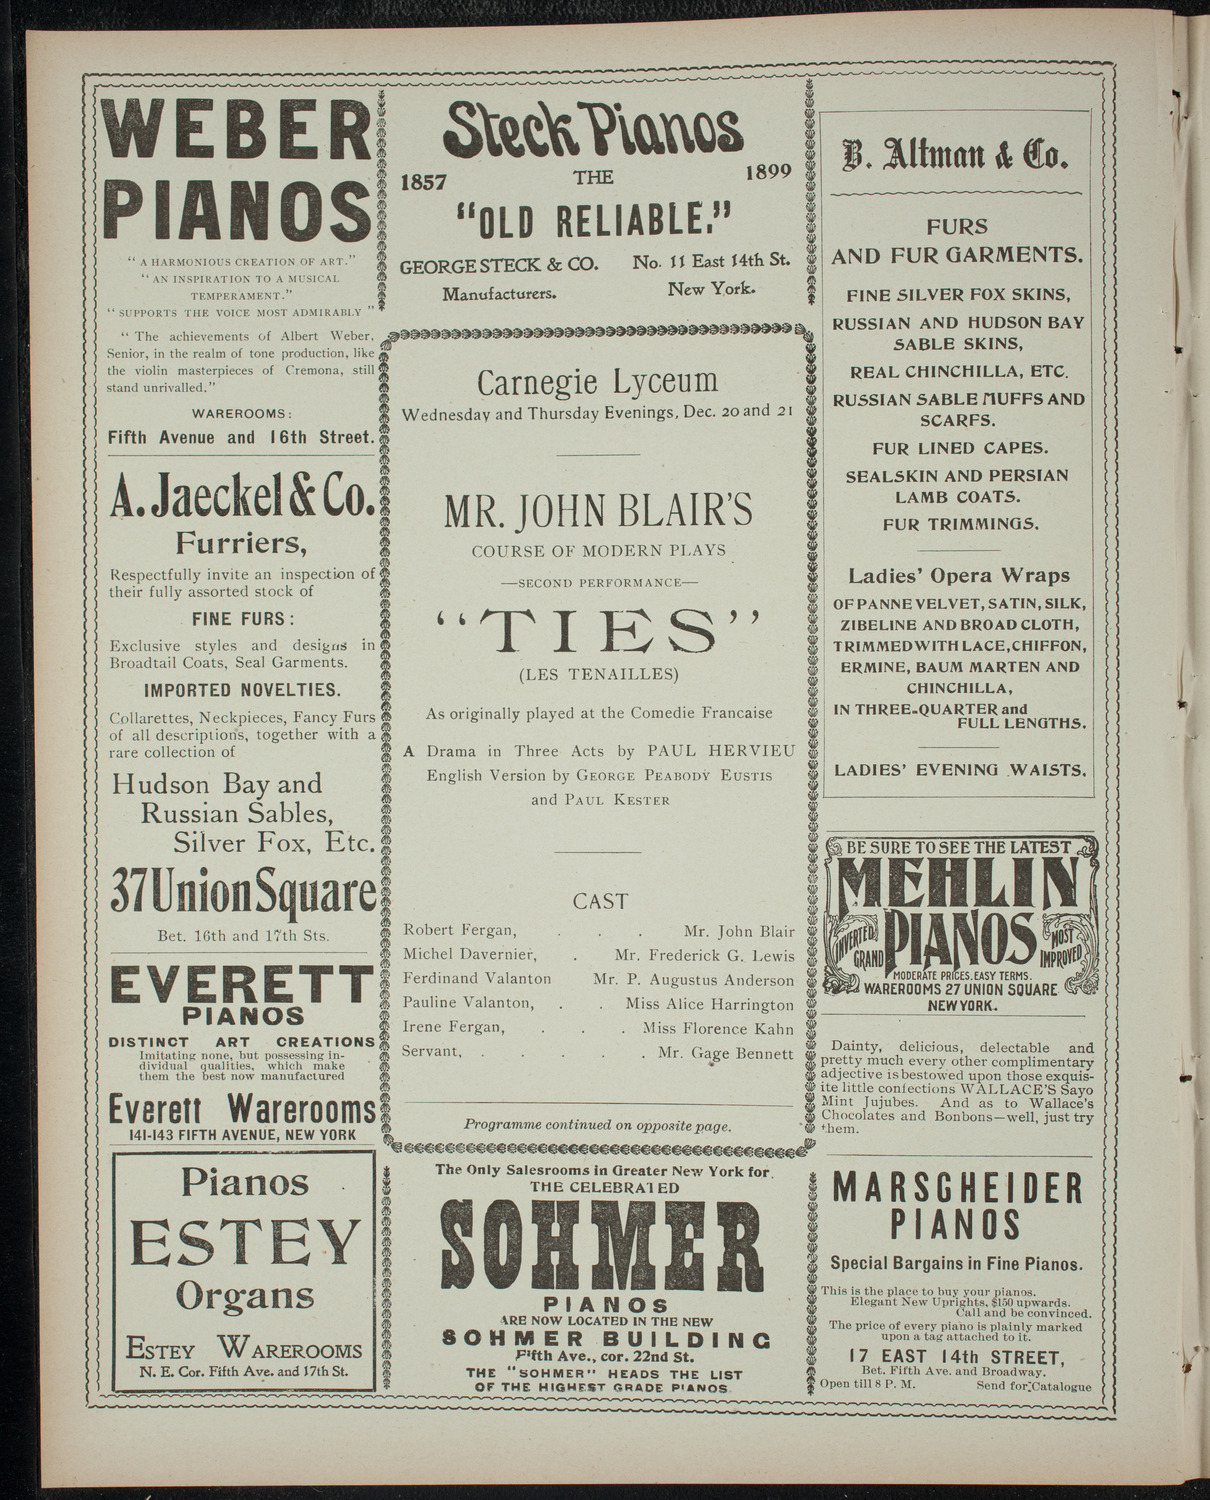 Mr. John Blair's Course of Modern Plays, December 20, 1899, program page 2